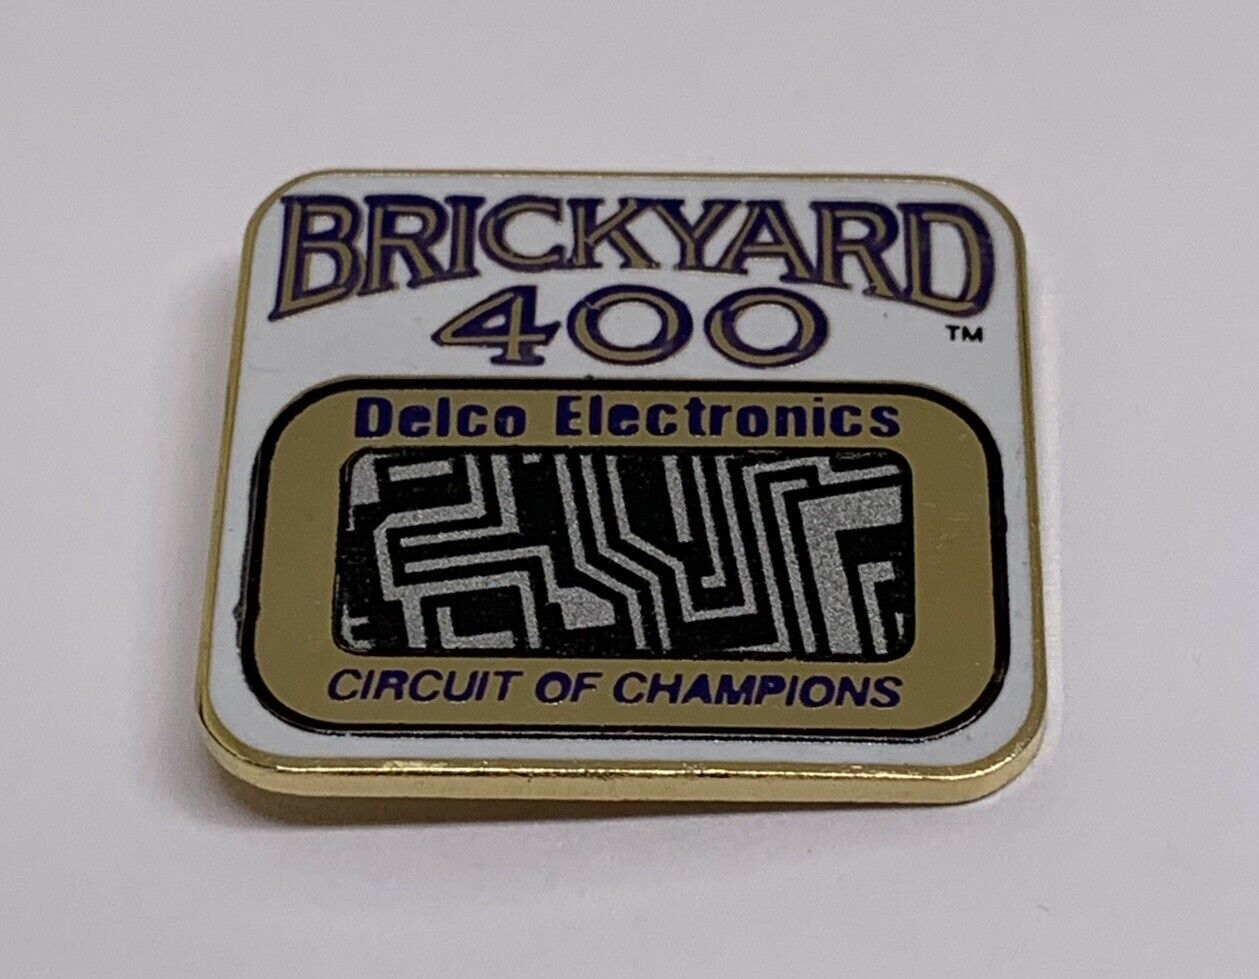 Brickyard 400 Delco Electronics Circuit Of Champions Lapel Pin (145)